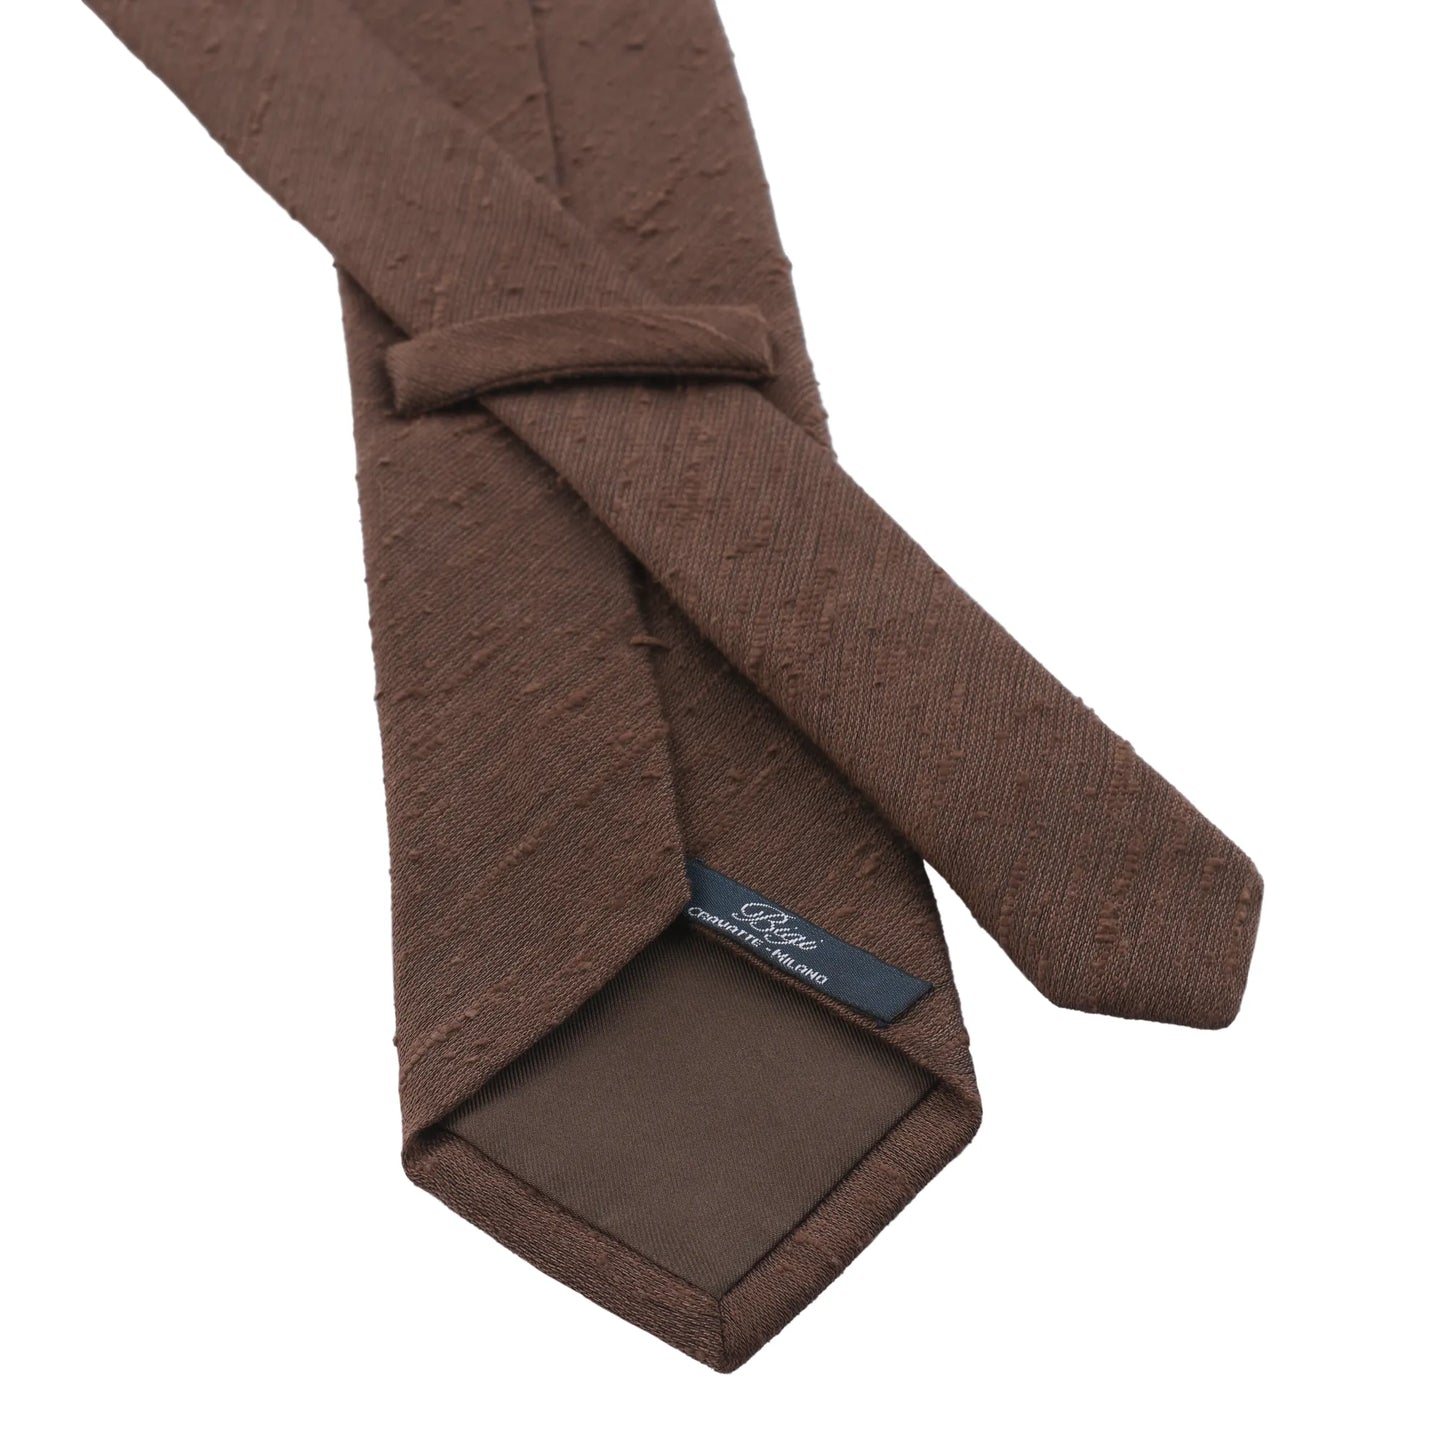 Shantung Lined Silk-Blend Tie in Solid Brown